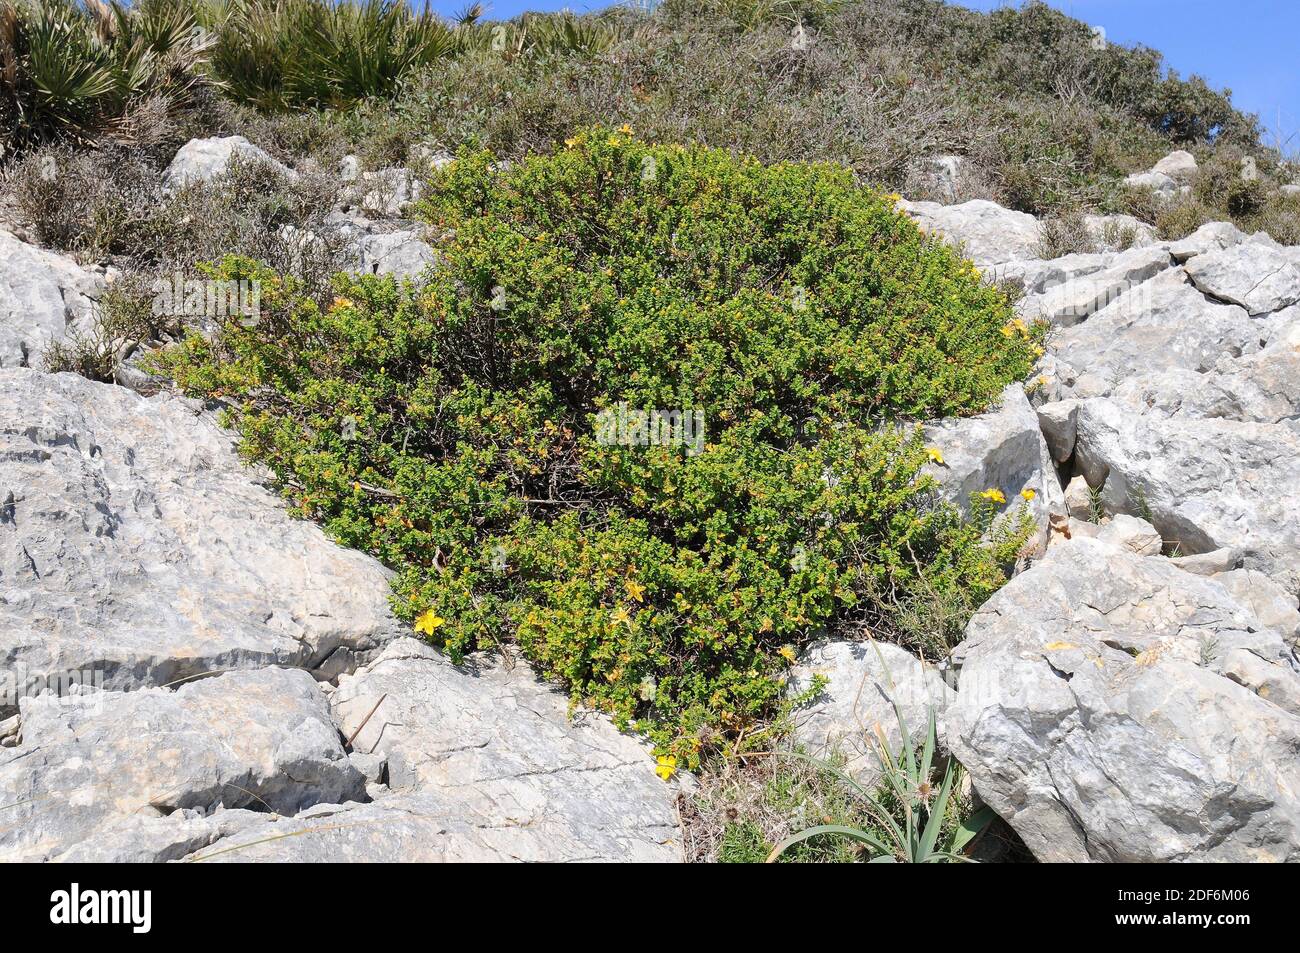 Estepa joana o hiperico de Baleares (Hypericum balearicum) es un arbusto perenne endémico de las Islas Baleares. Esta foto fue tomada en Serra de Foto de stock